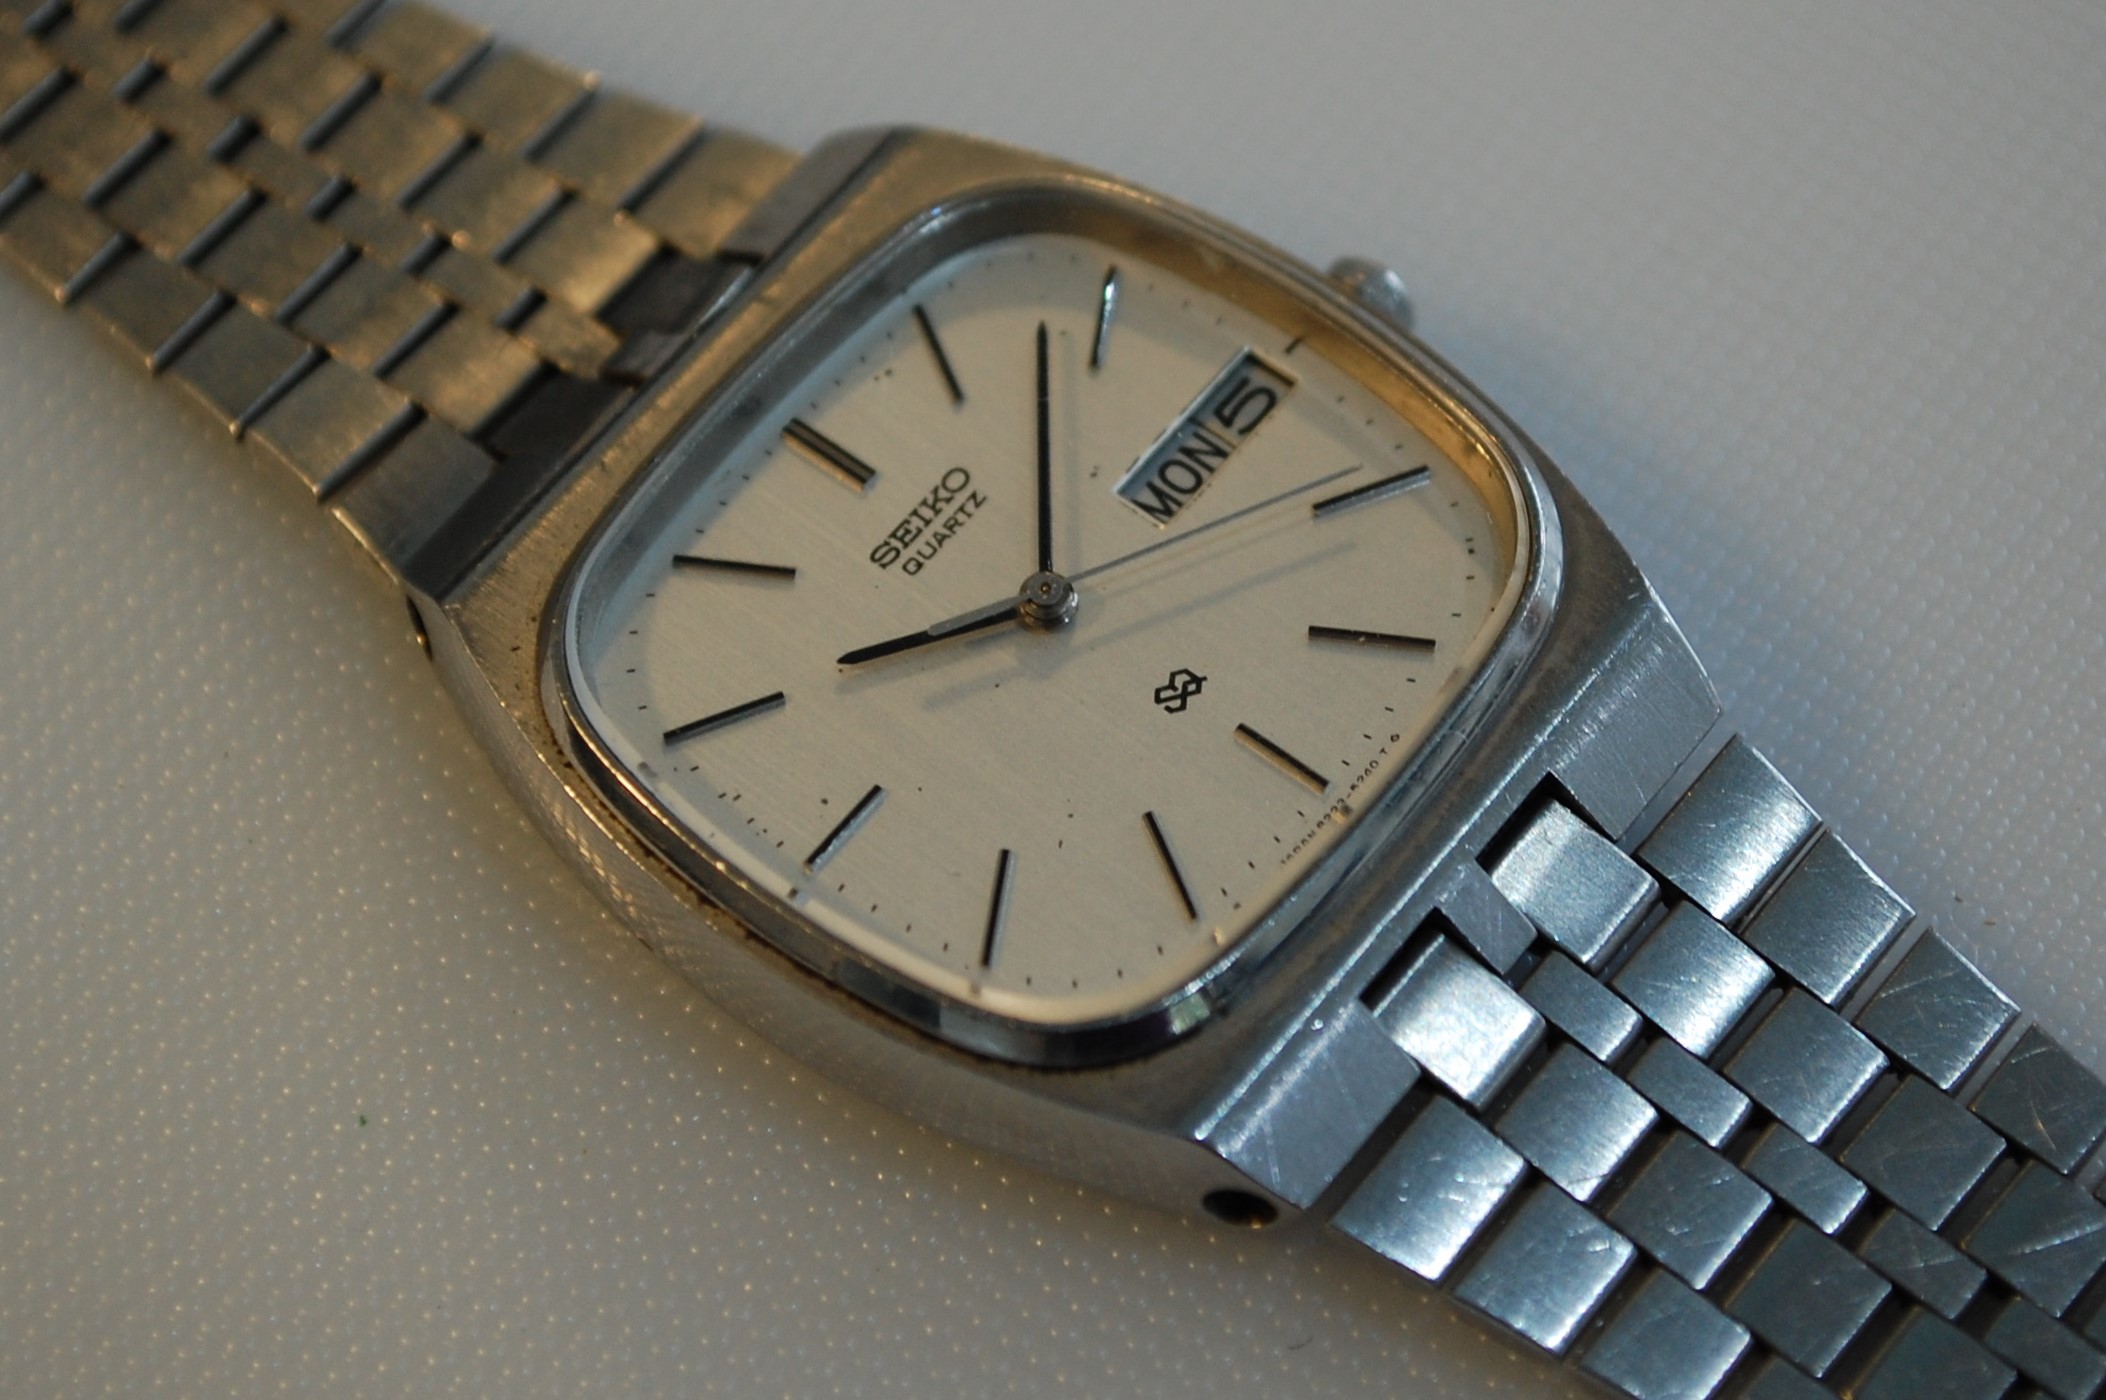 SOLD 1980 Seiko men's SQ day date watch - Birth Year Watches